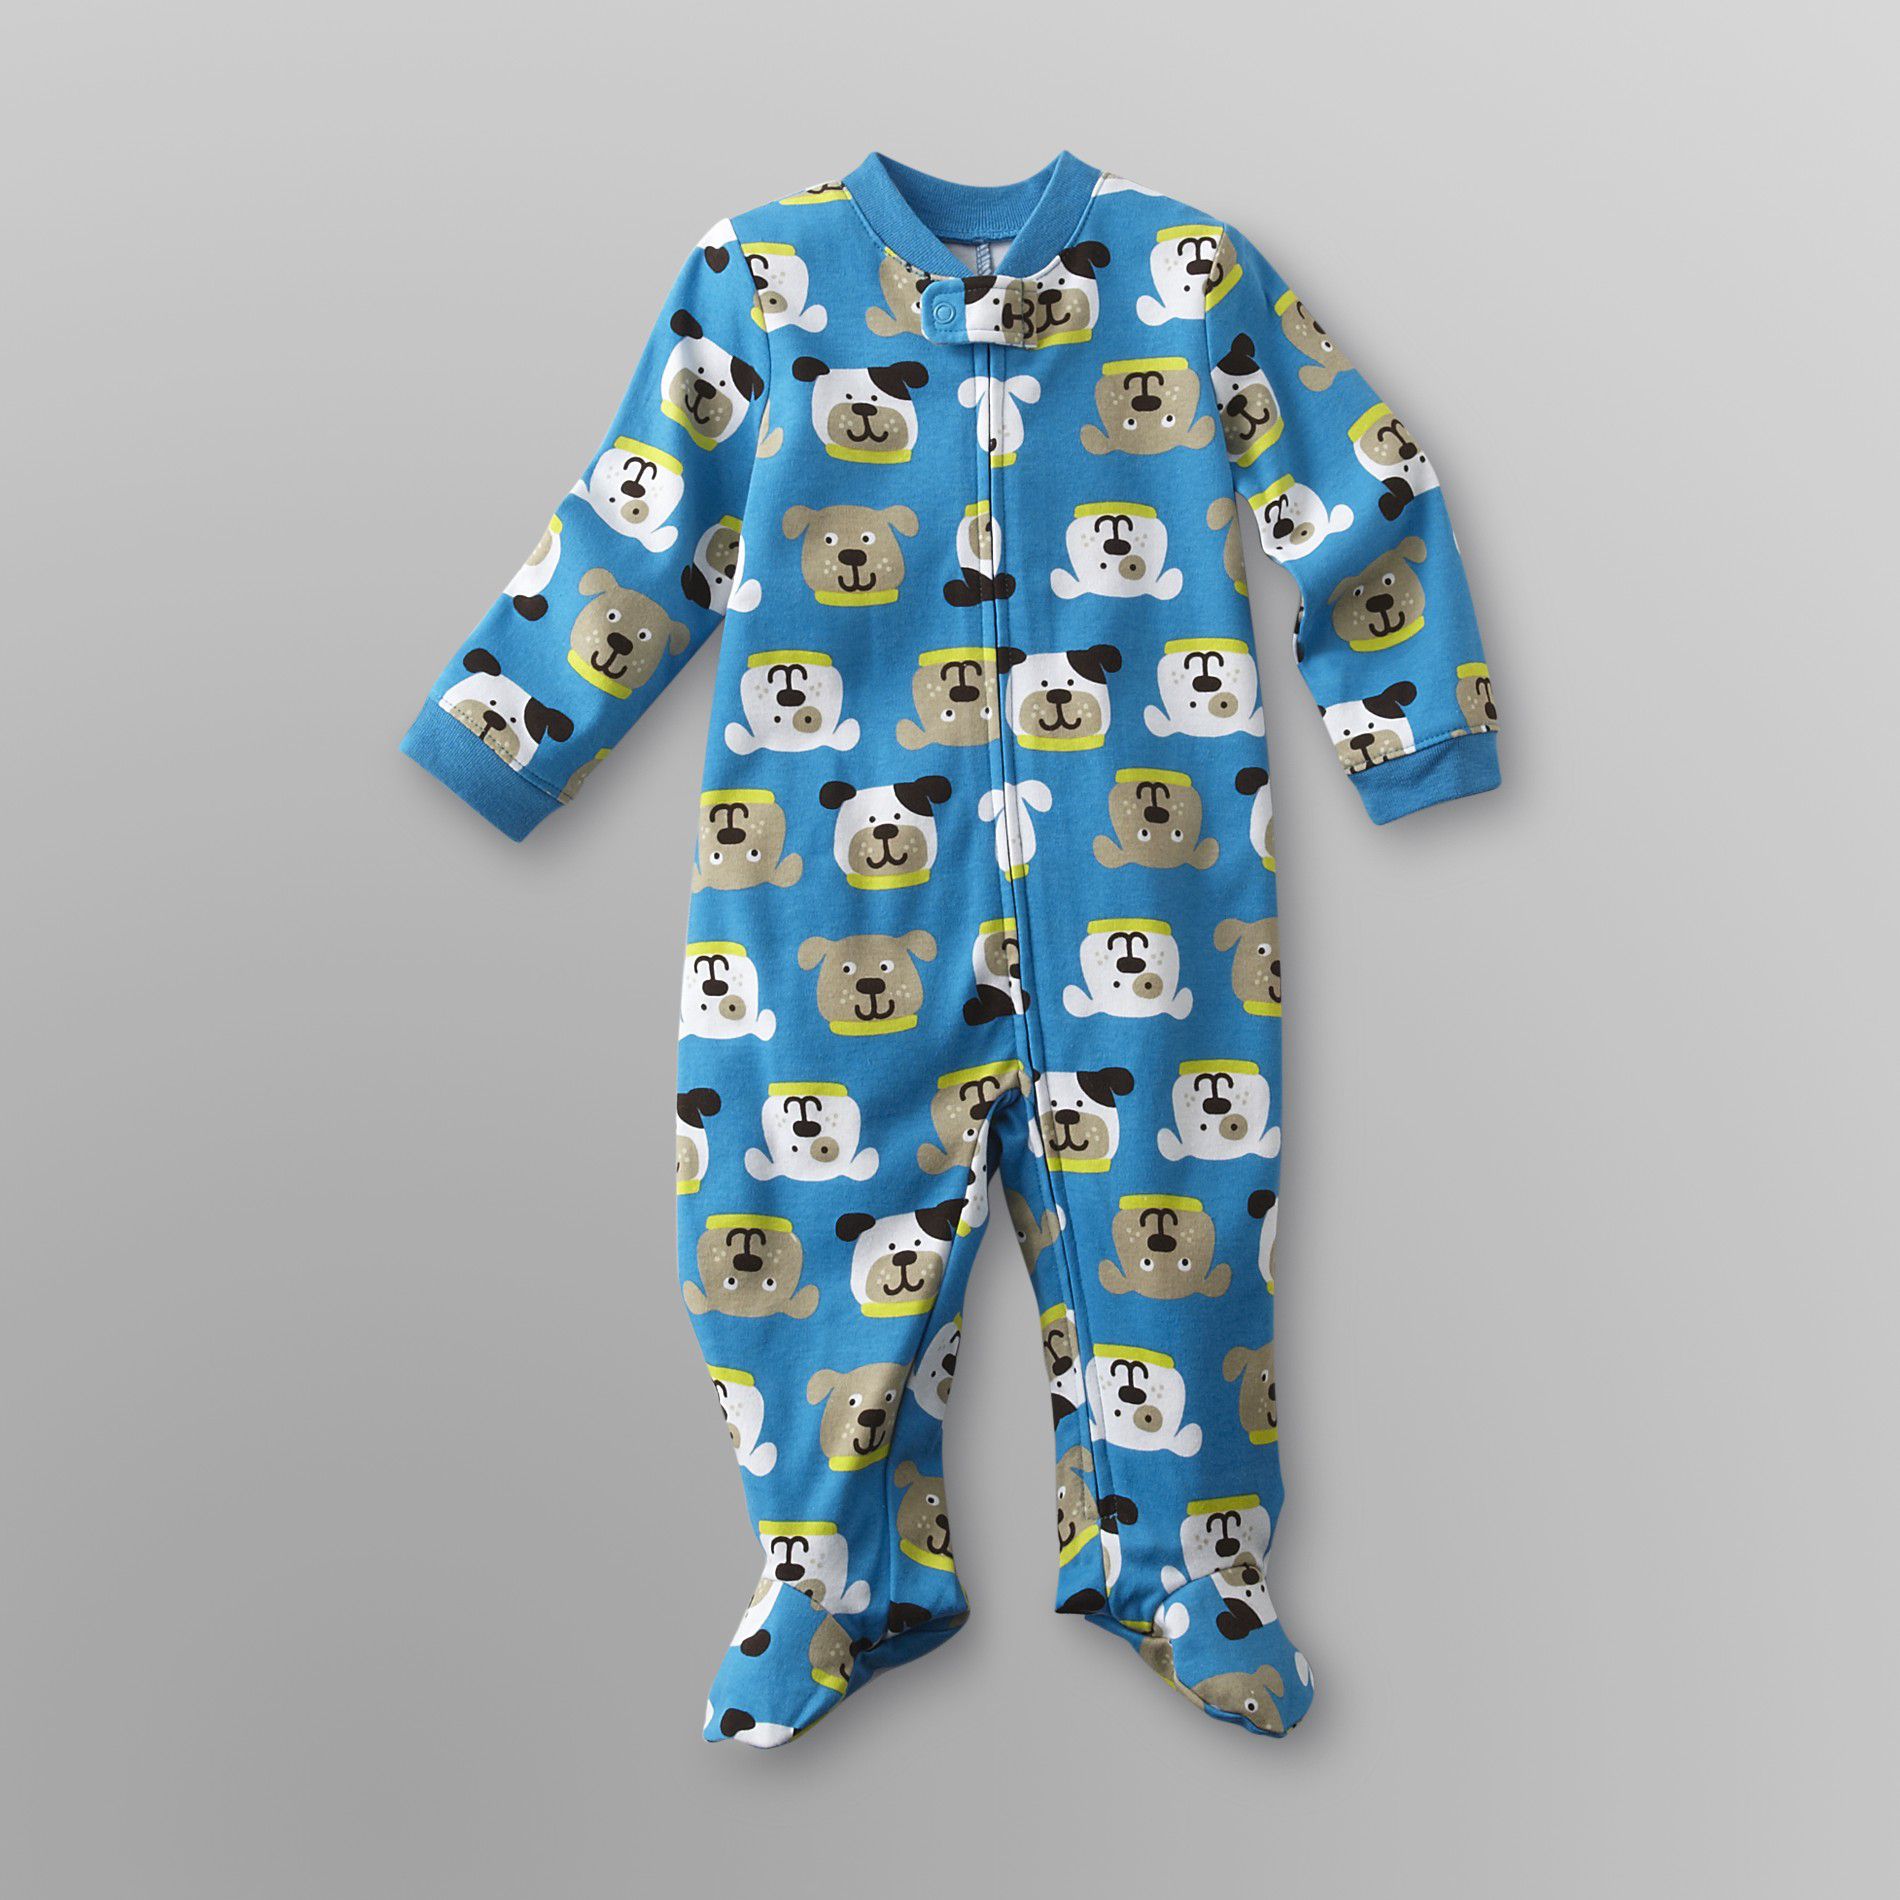 Little Wonders Infant Boy's Sleeper Pajamas - Dogs